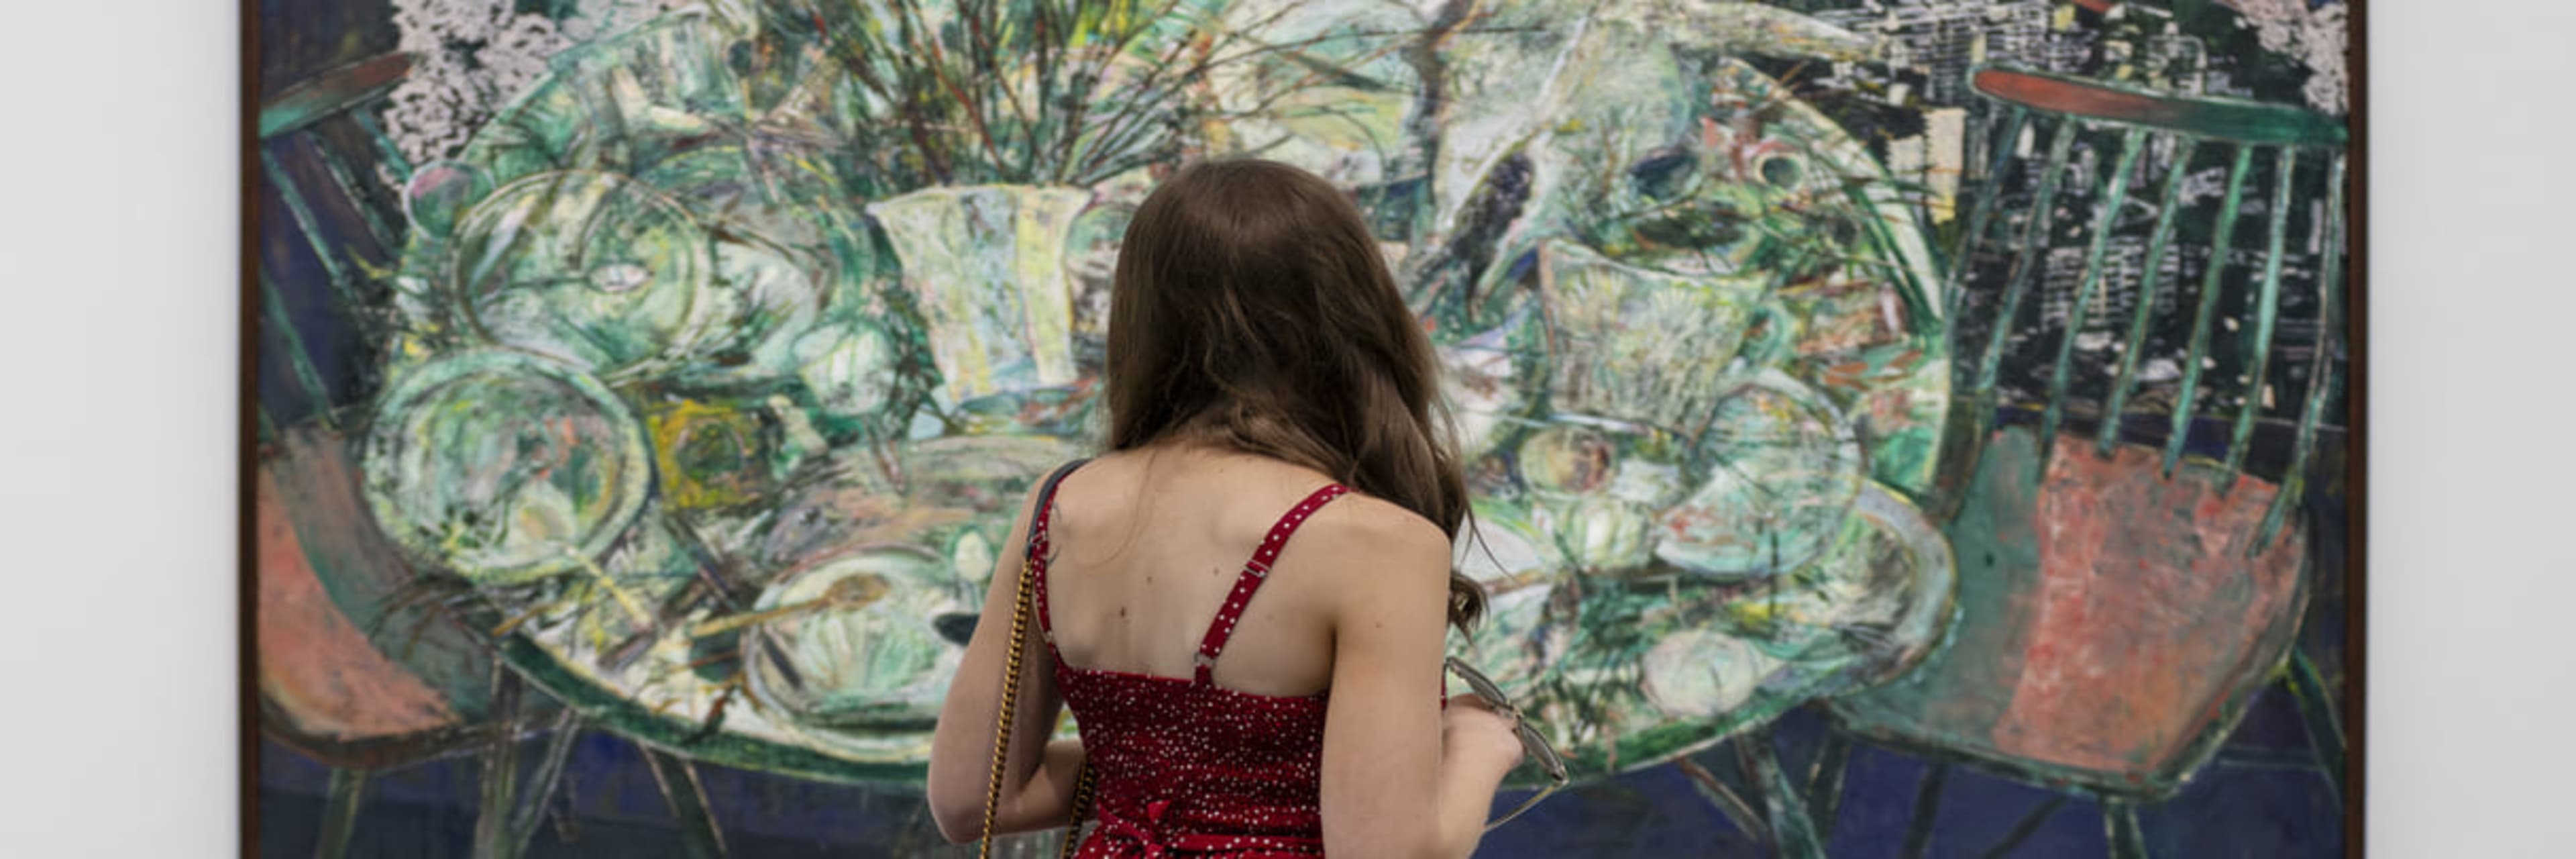 Woman looking at painting